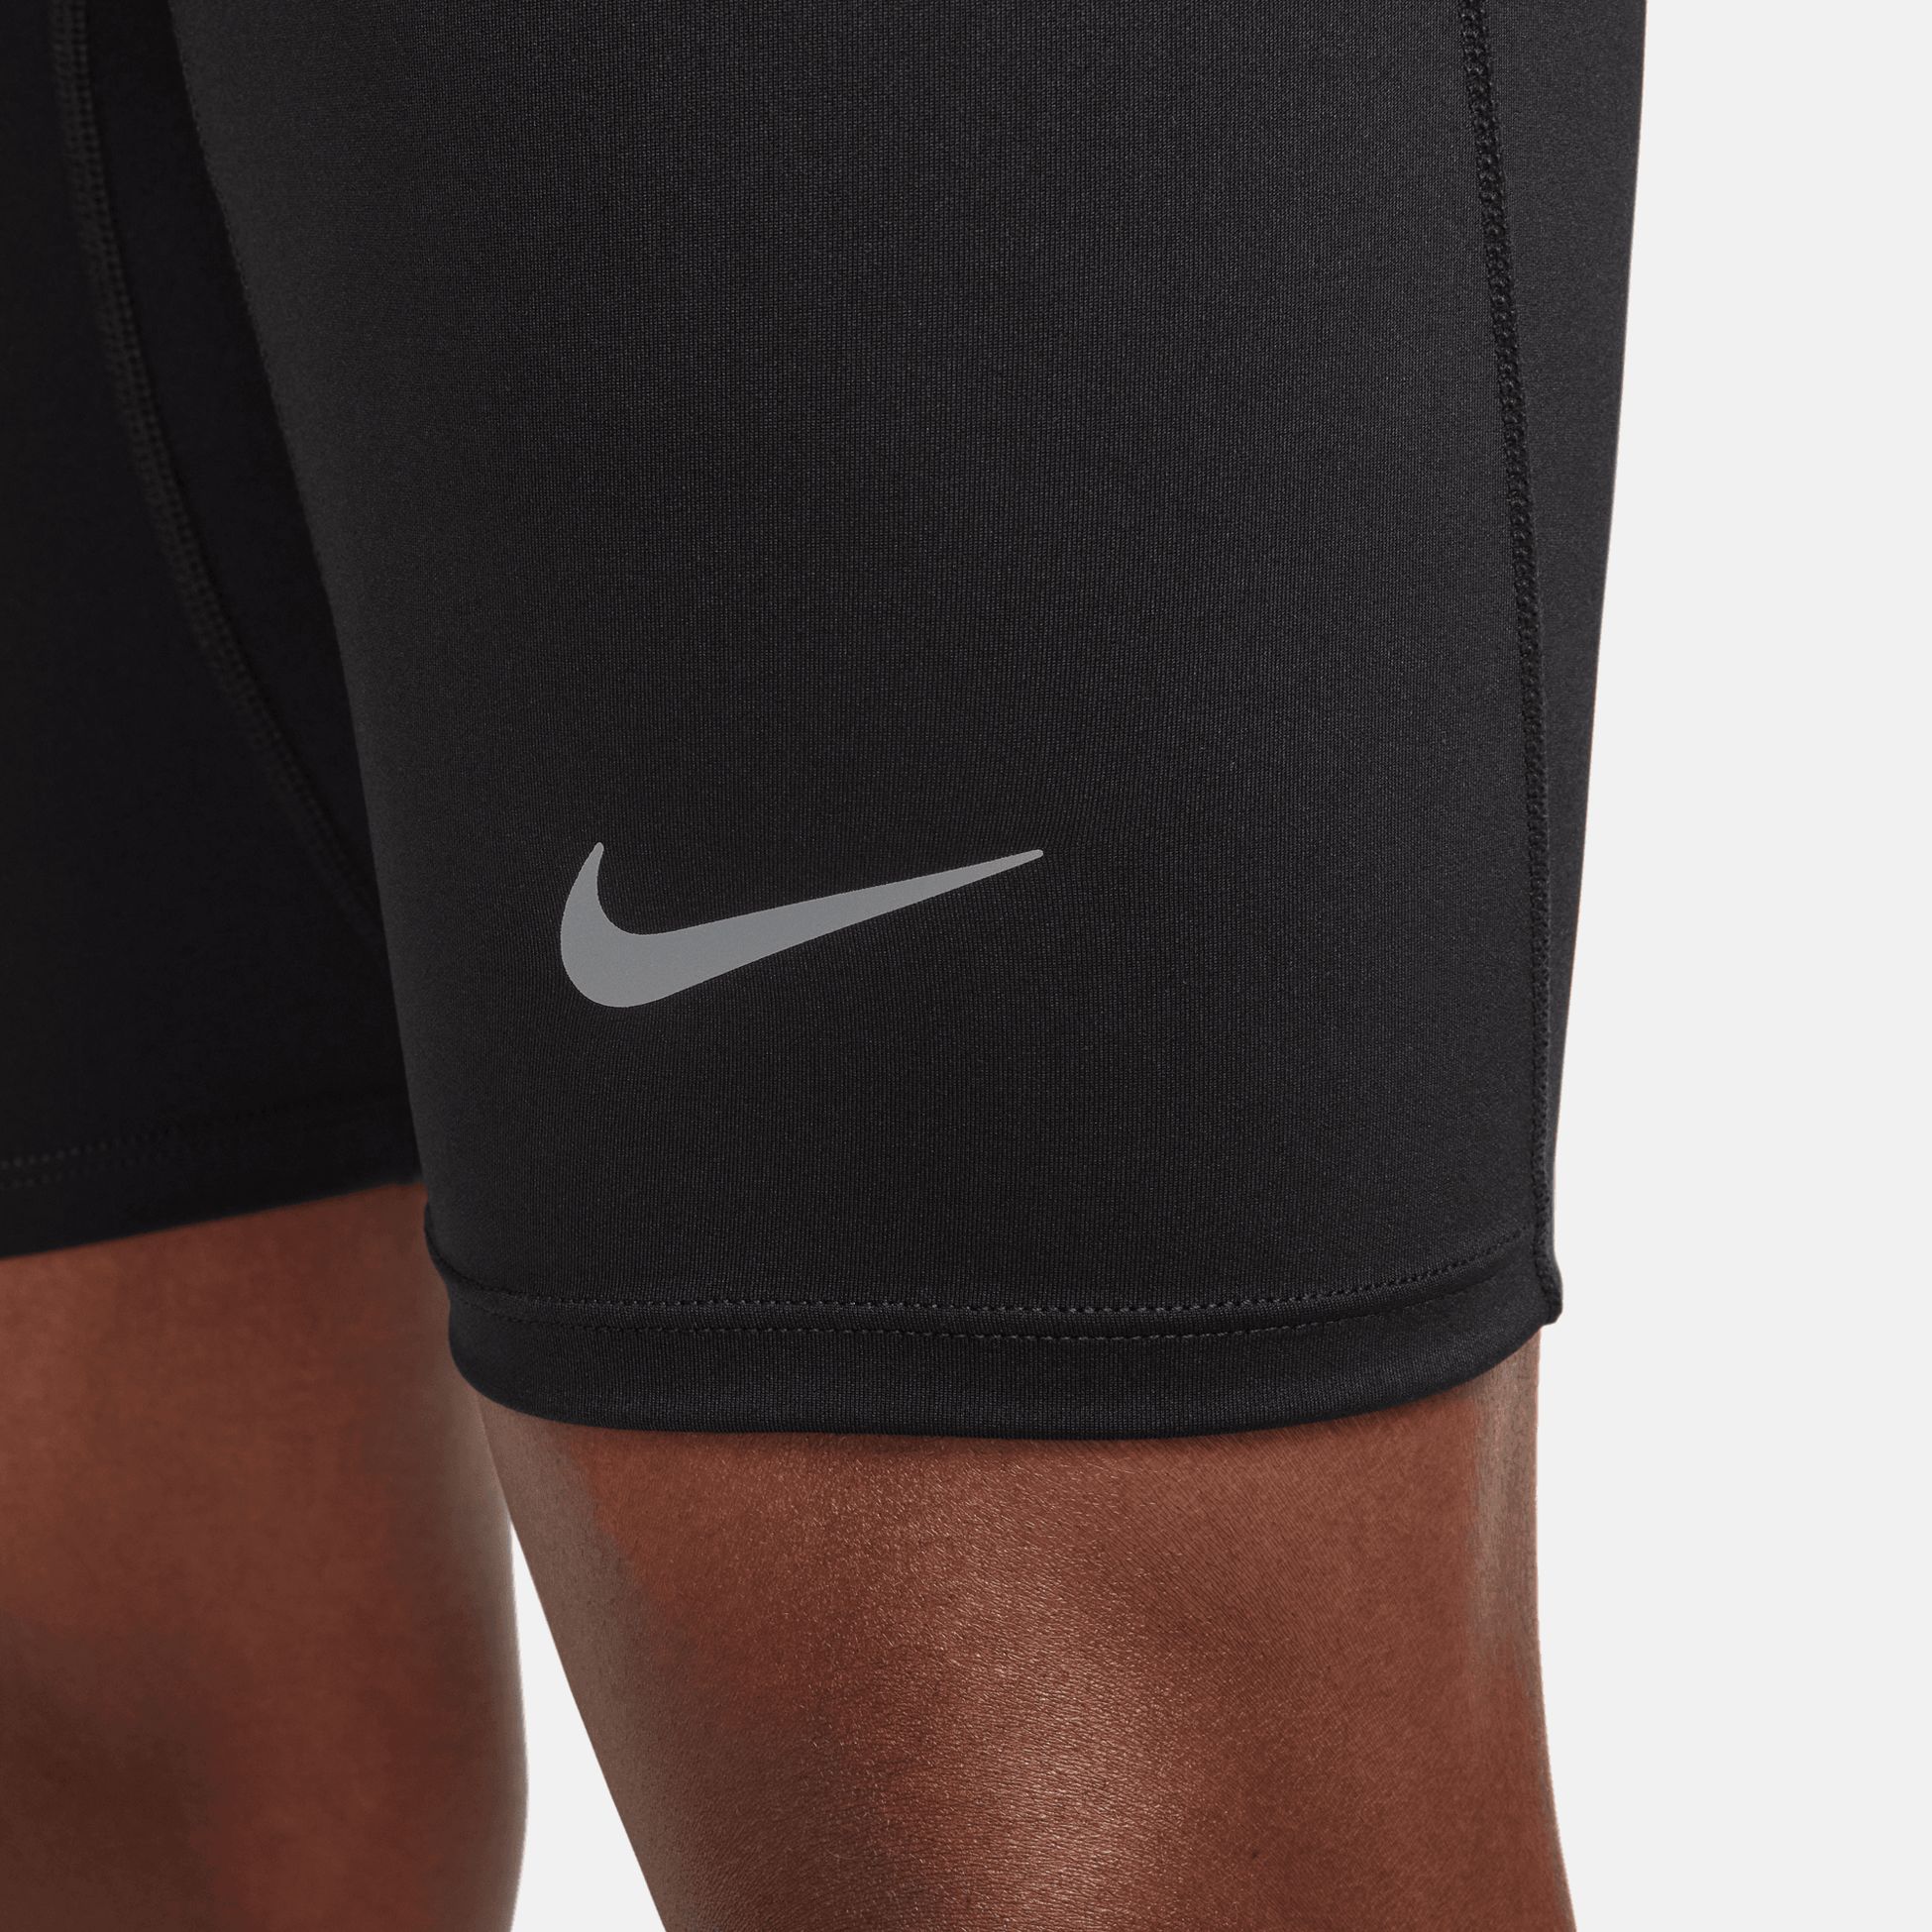 NIKE, Nike Fast Men's Dri-FIT Brief-Lined